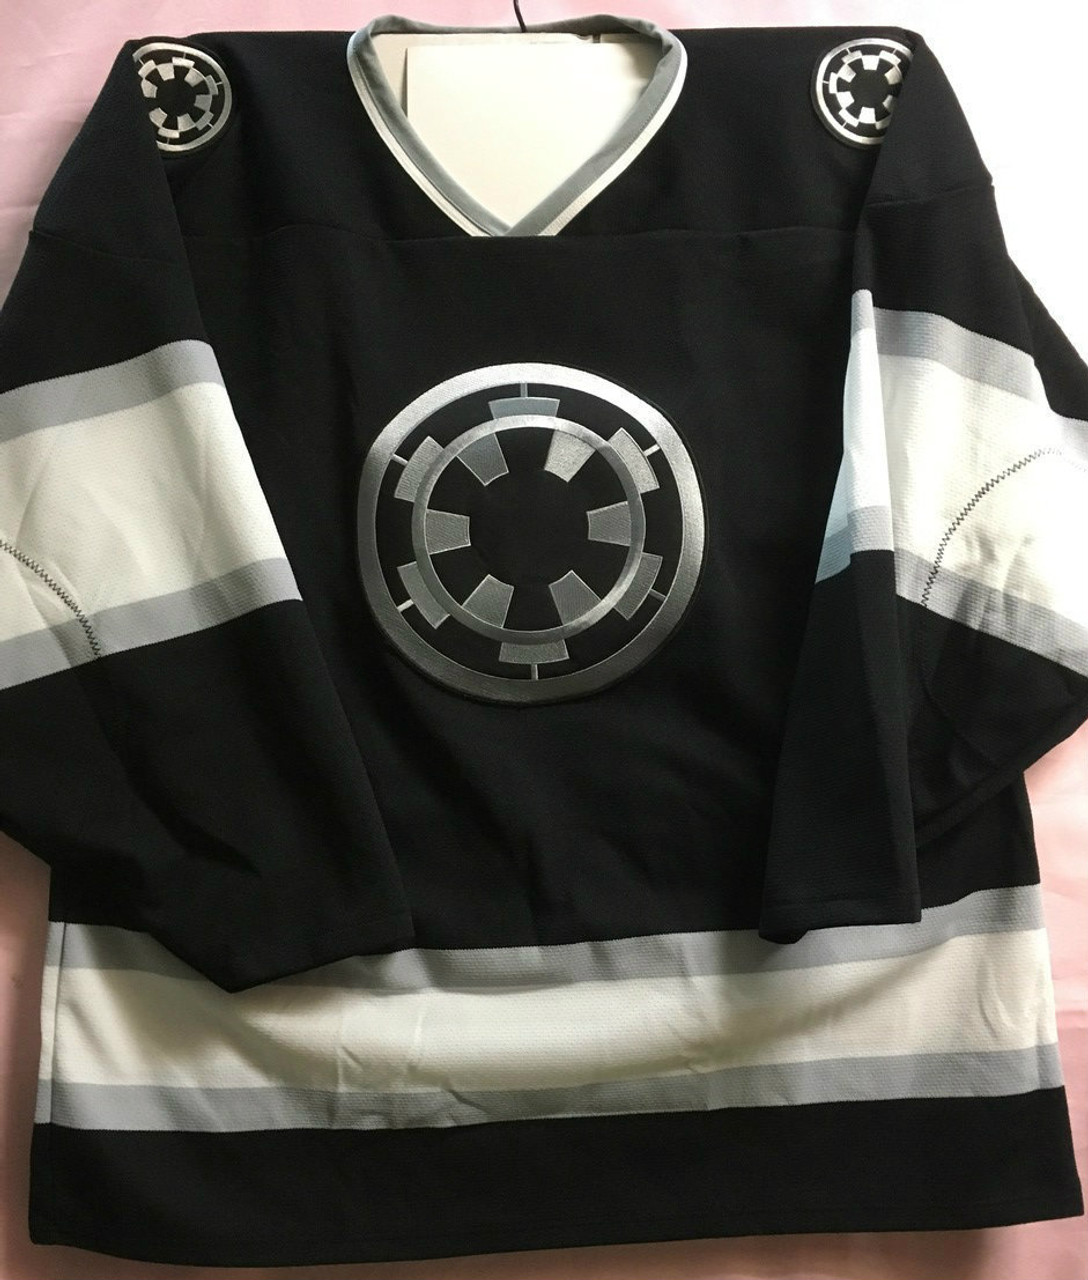 star wars hockey jersey